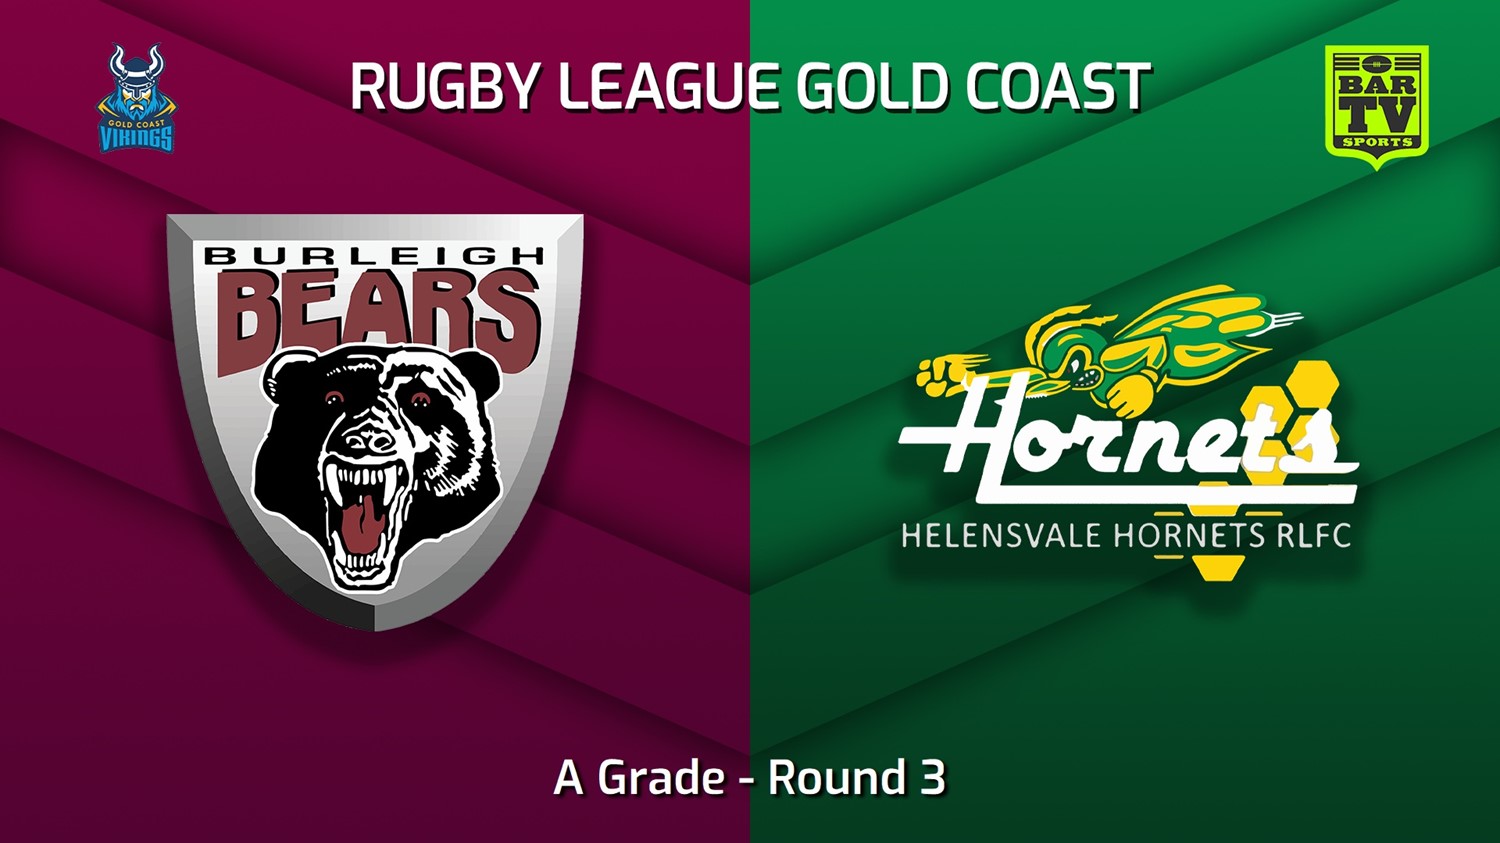 230507-Gold Coast Round 3 - A Grade - Burleigh Bears v Helensvale Hornets Minigame Slate Image